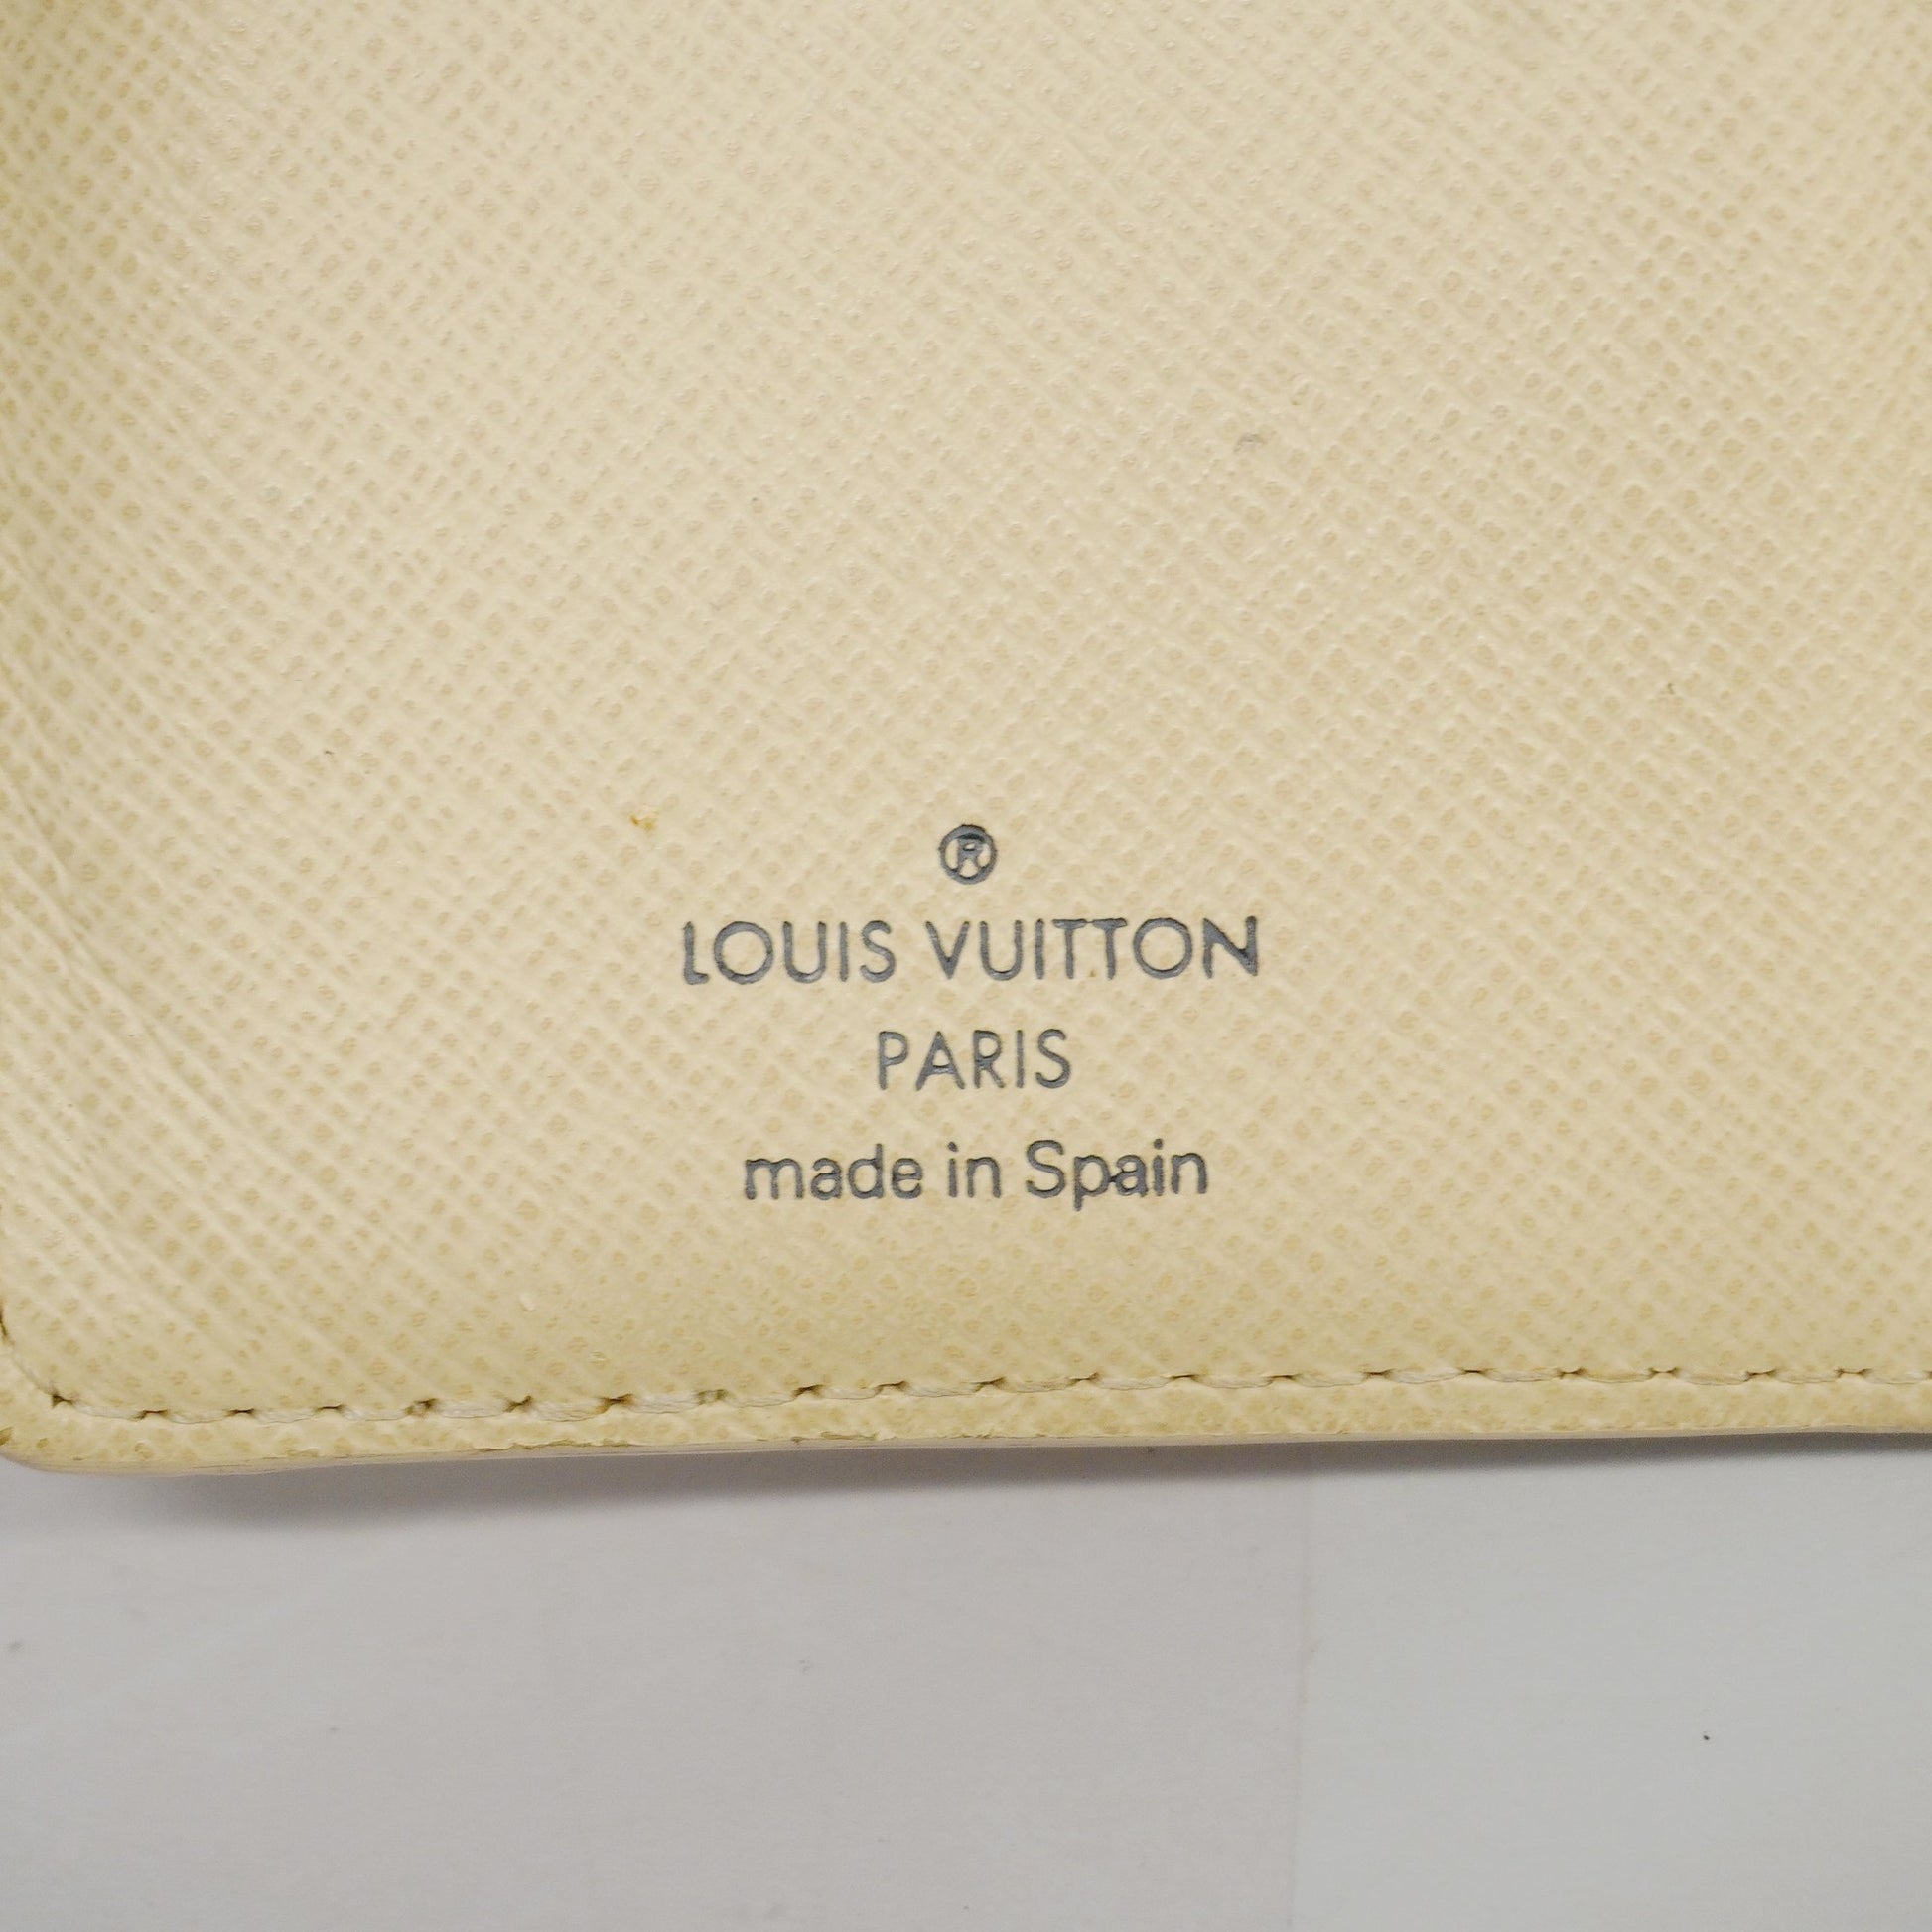 Auth Louis Vuitton Damier Azur Portefeuille Koala N60013 Women's Wallet